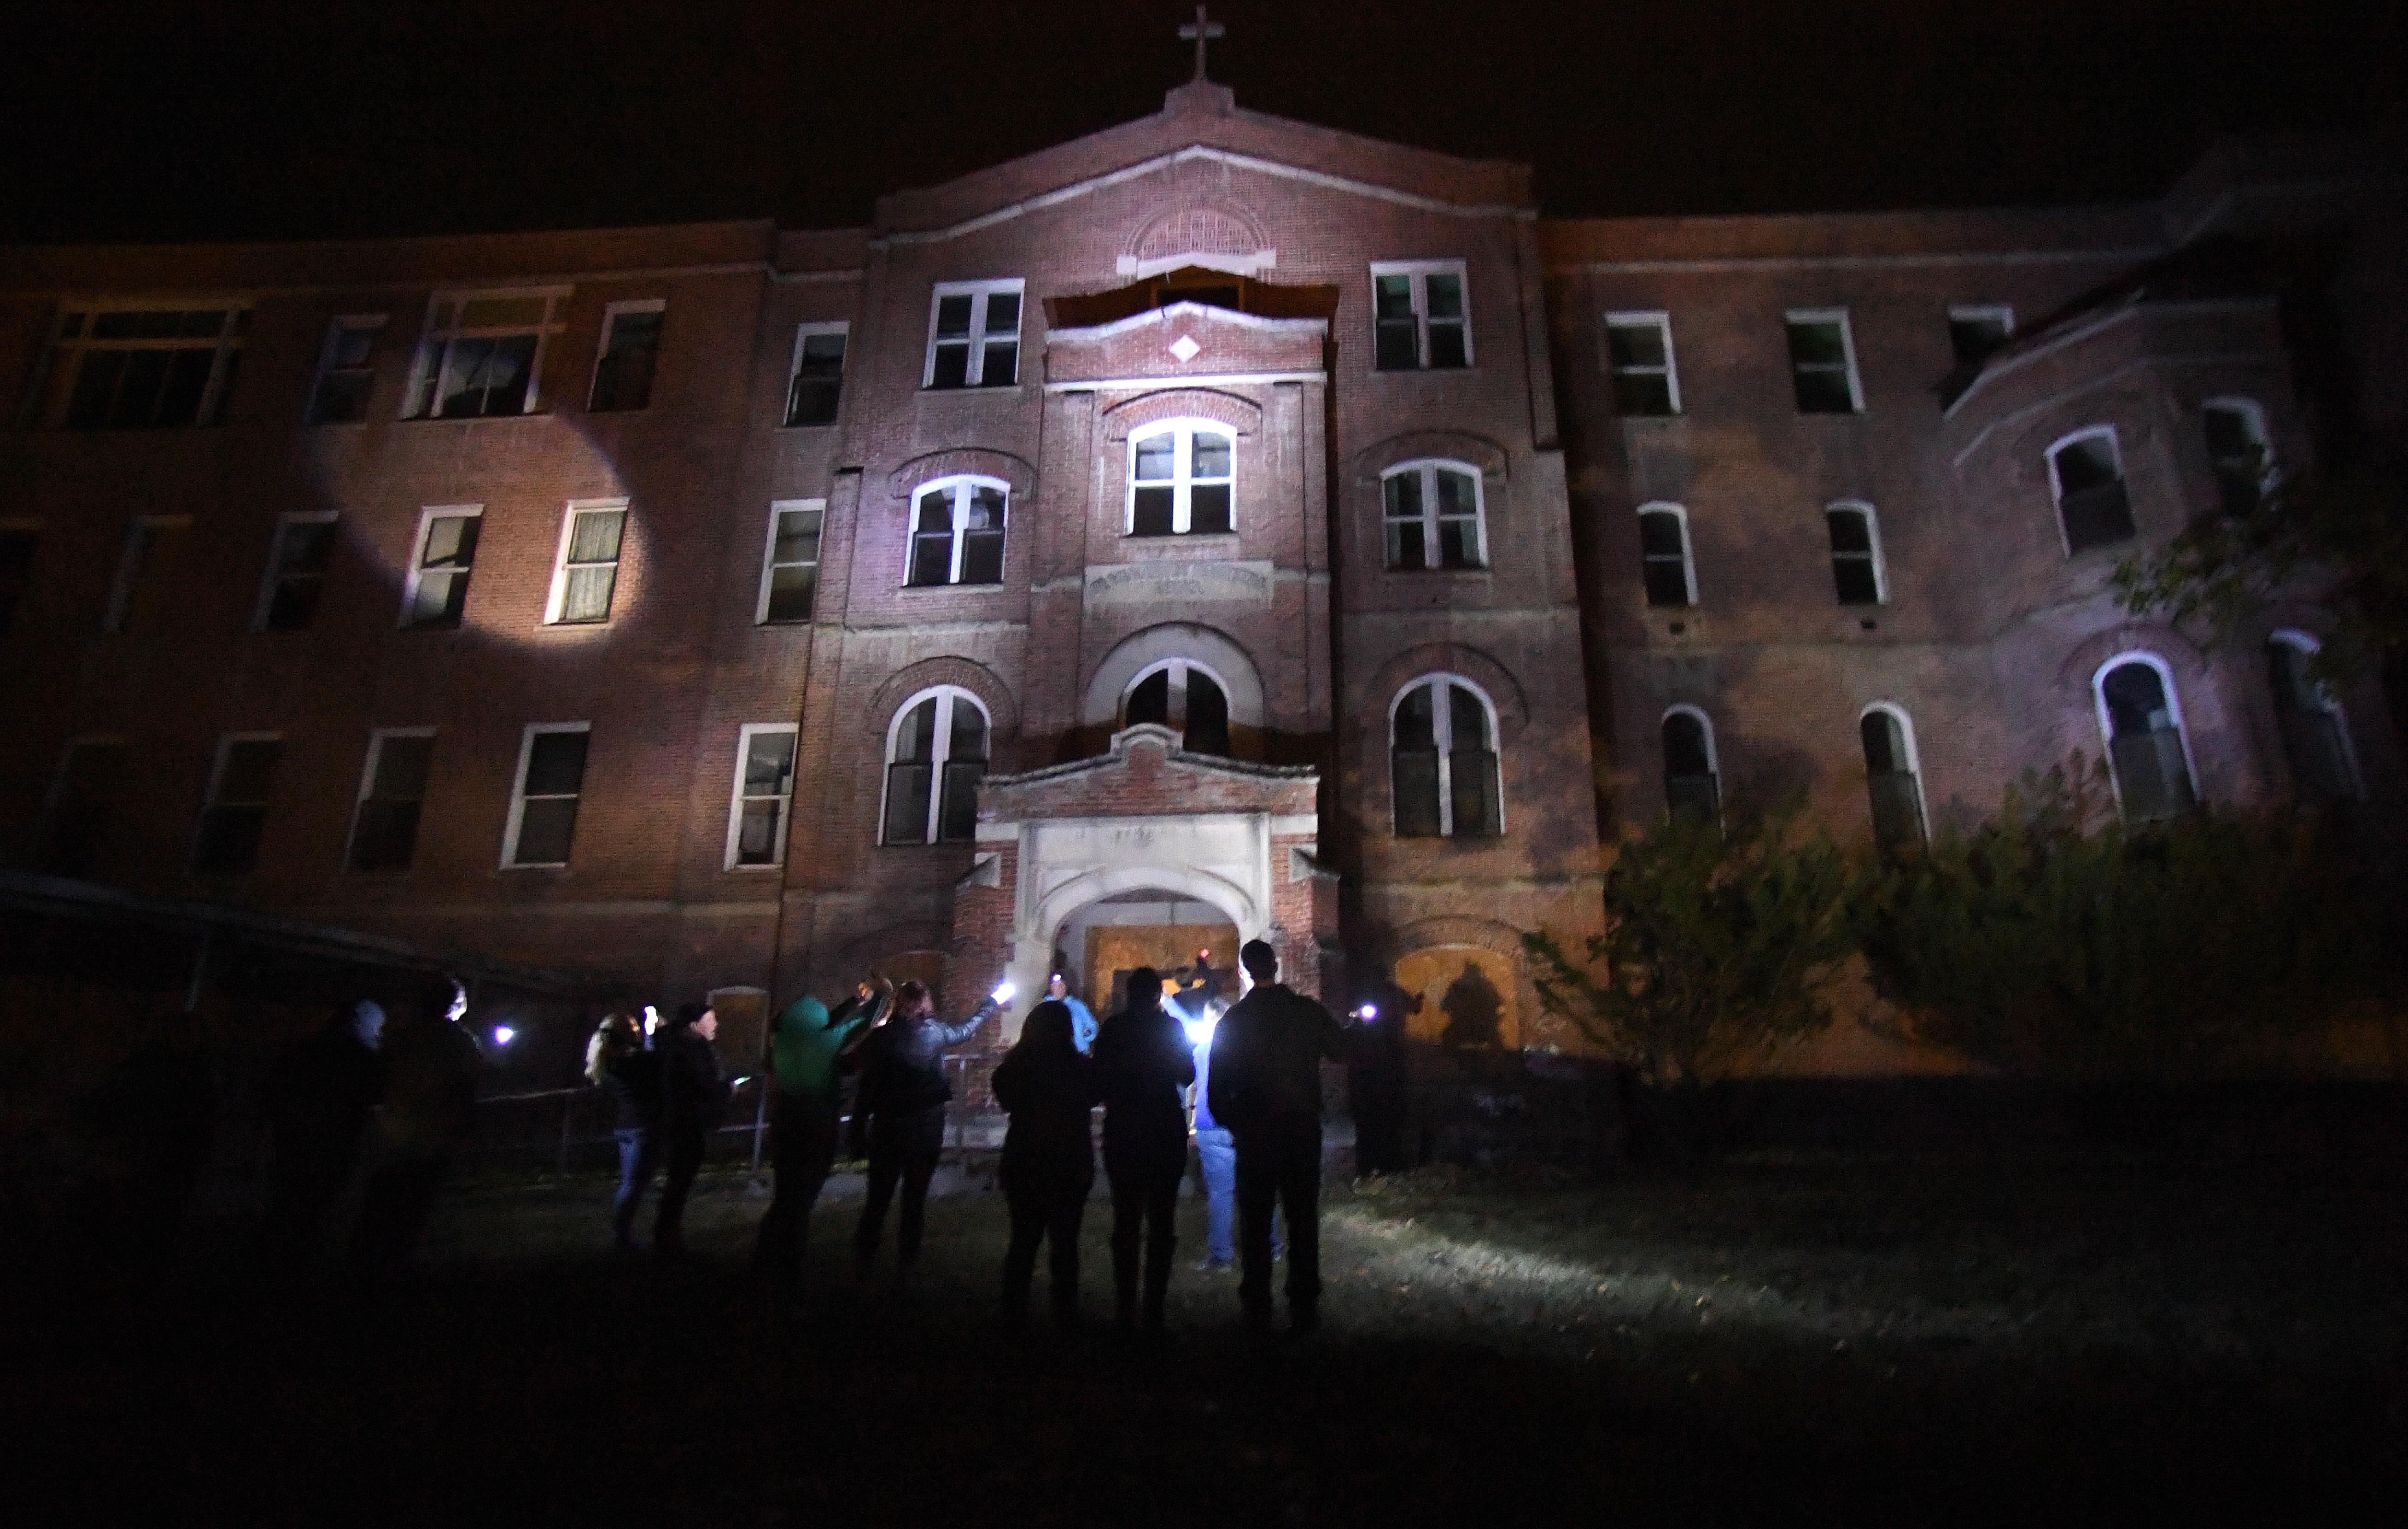 St. Ignatius haunted hospital The SpokesmanReview